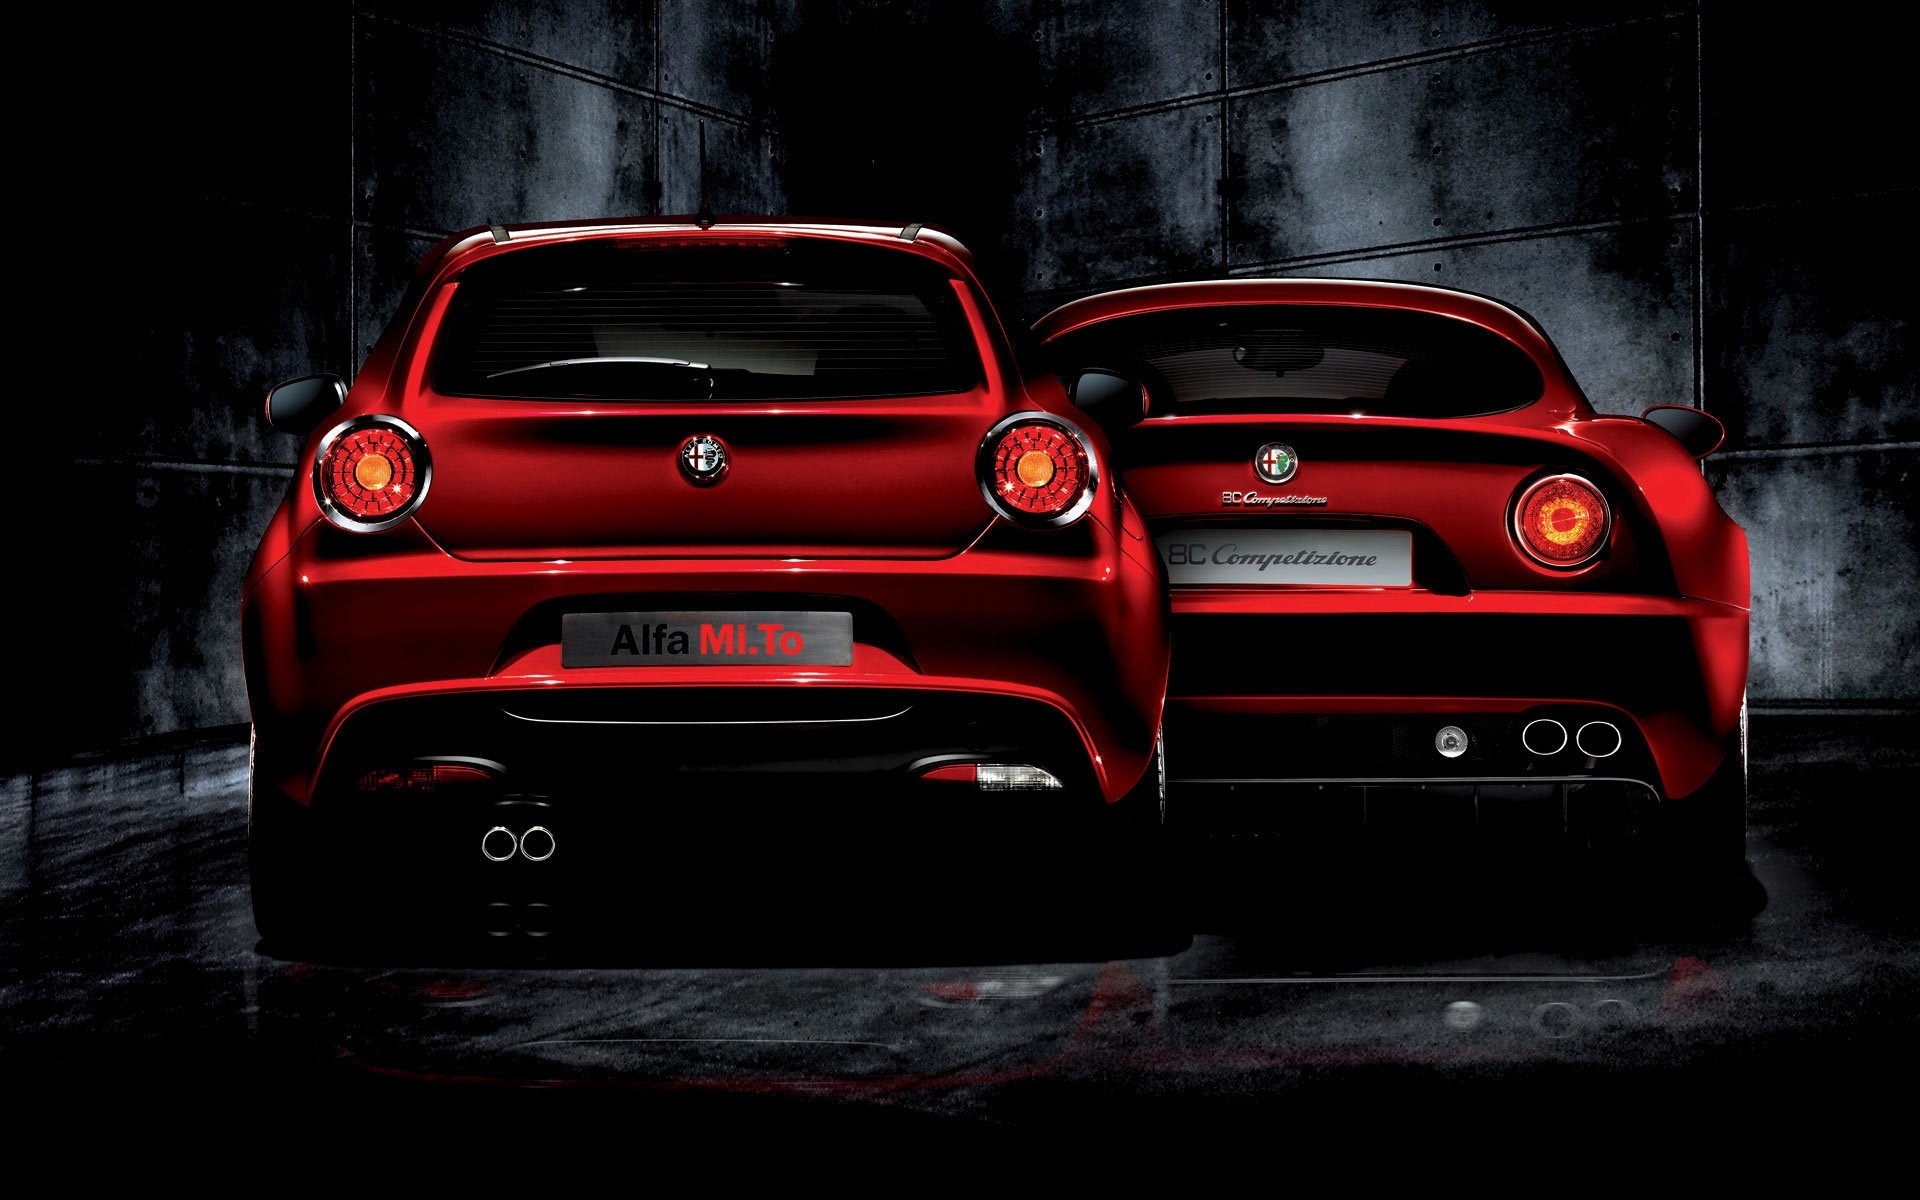 Alfa Romeo Mi To And 8c Competizione Android Wallpapers